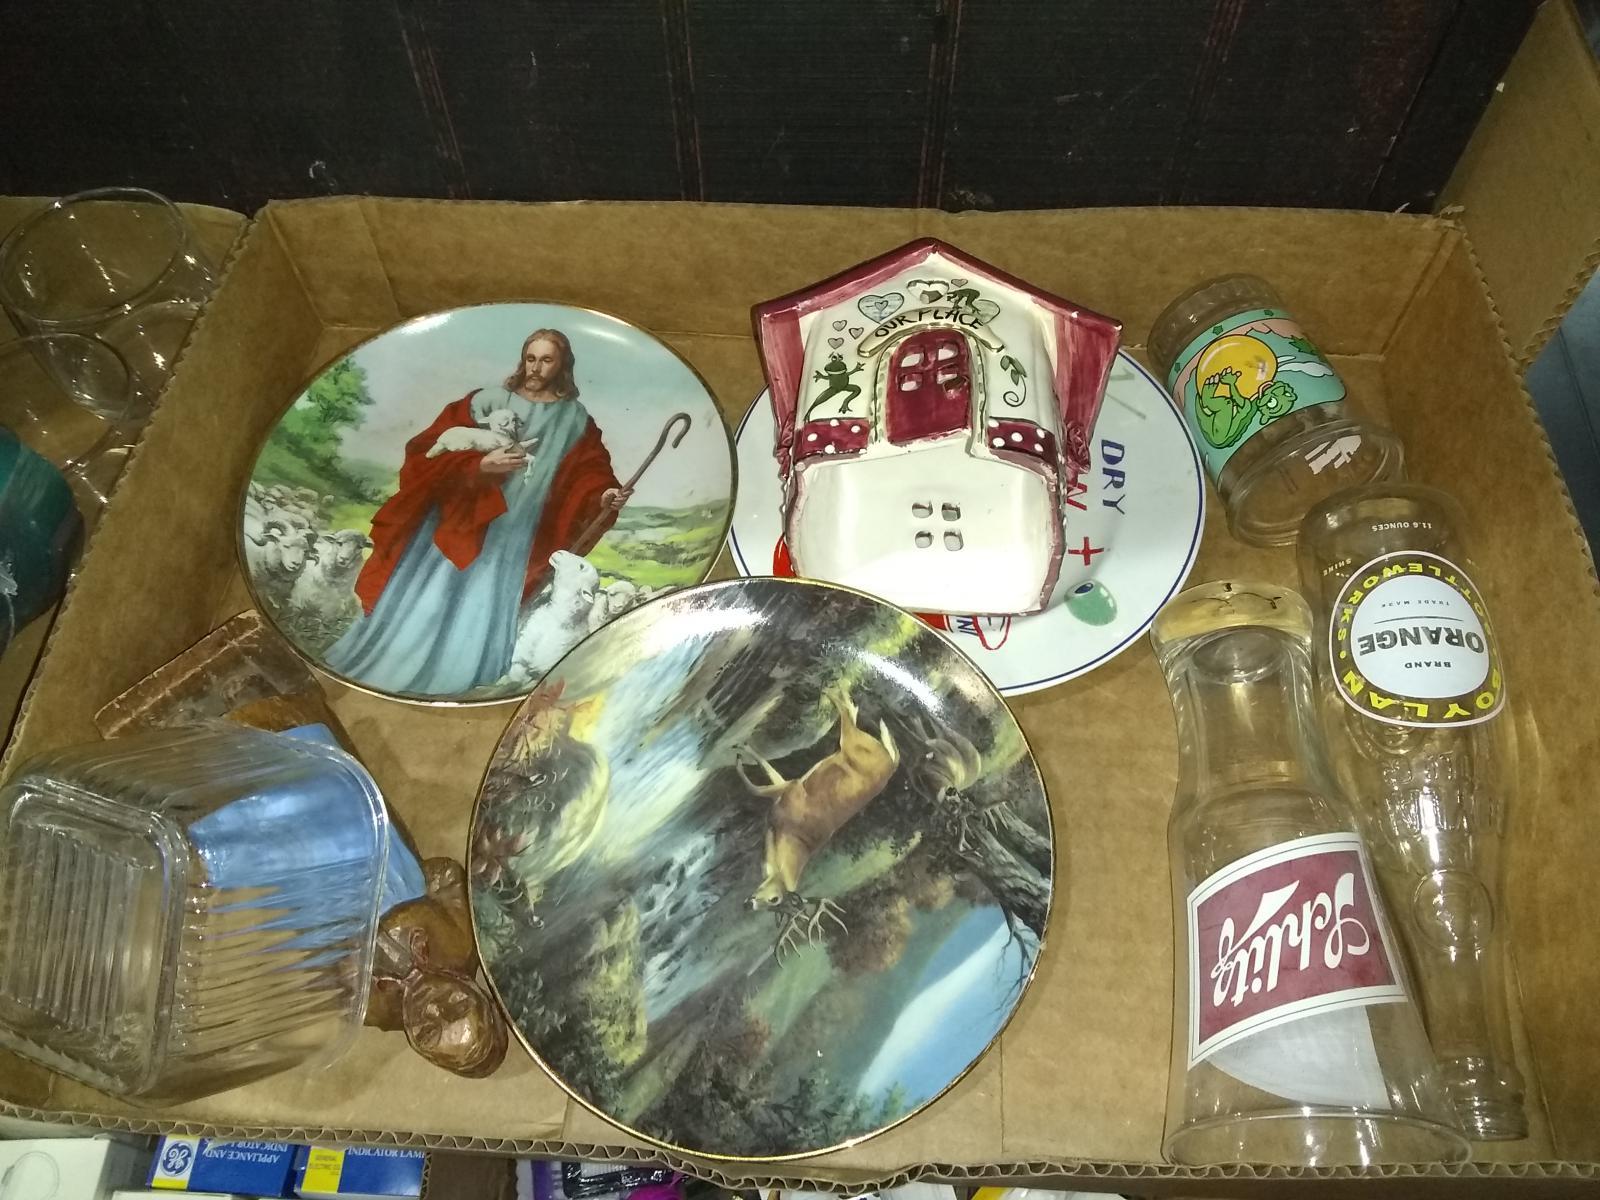 BL-Decorative Plates, Glasses, Bottles, Grandma Figure